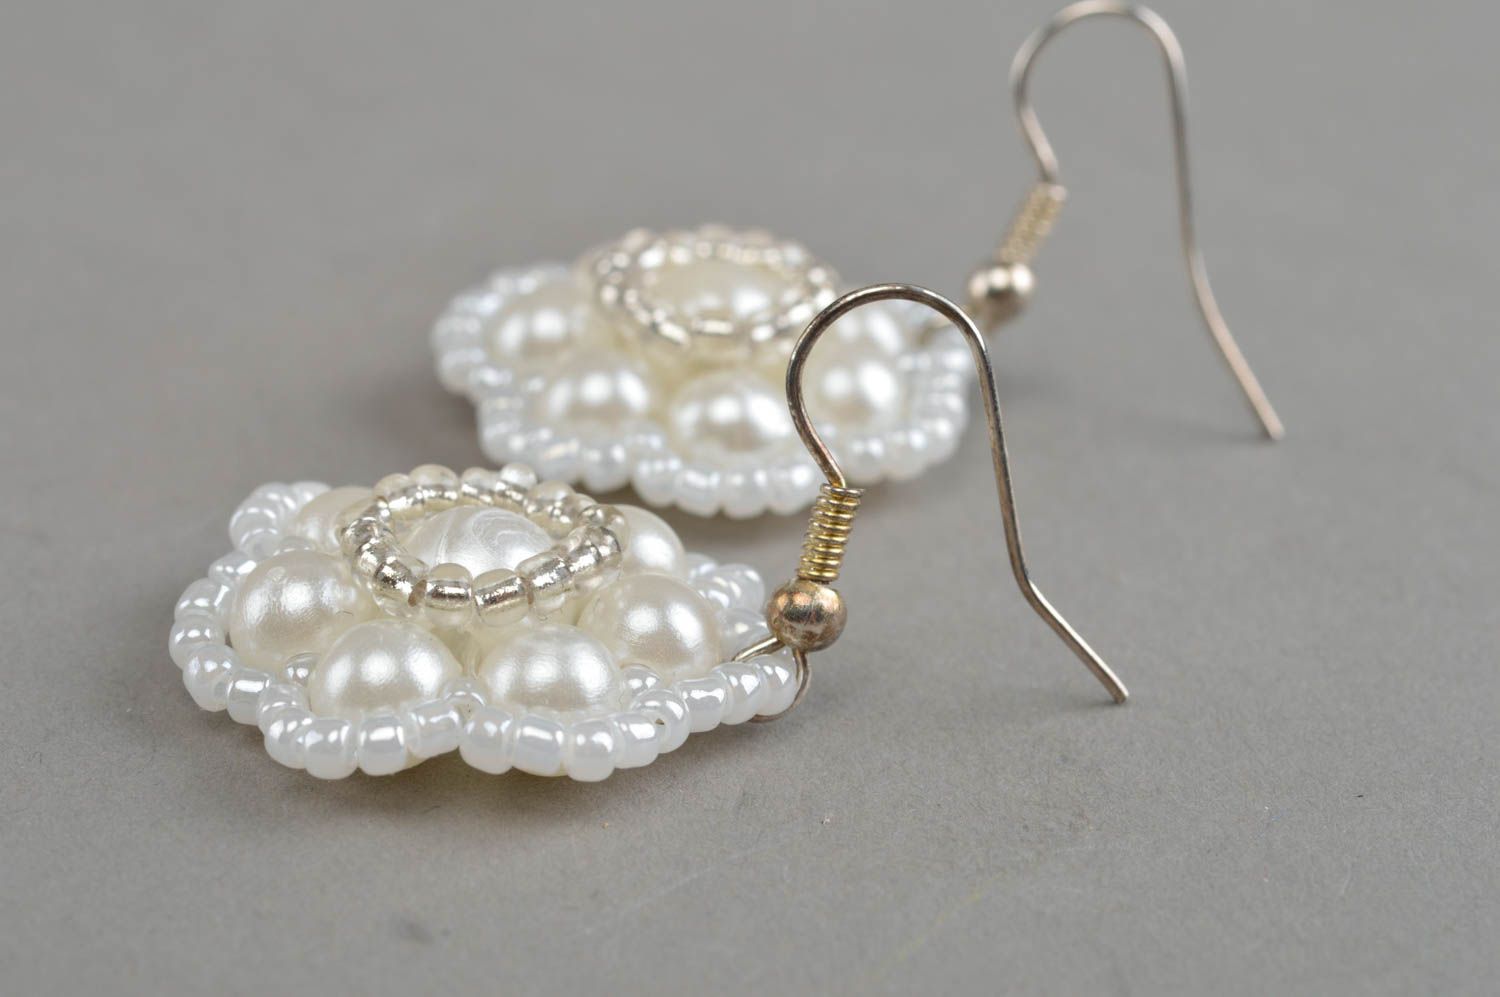 Handmade beaded flower earrings designer jewelry unusual gifts for her photo 3